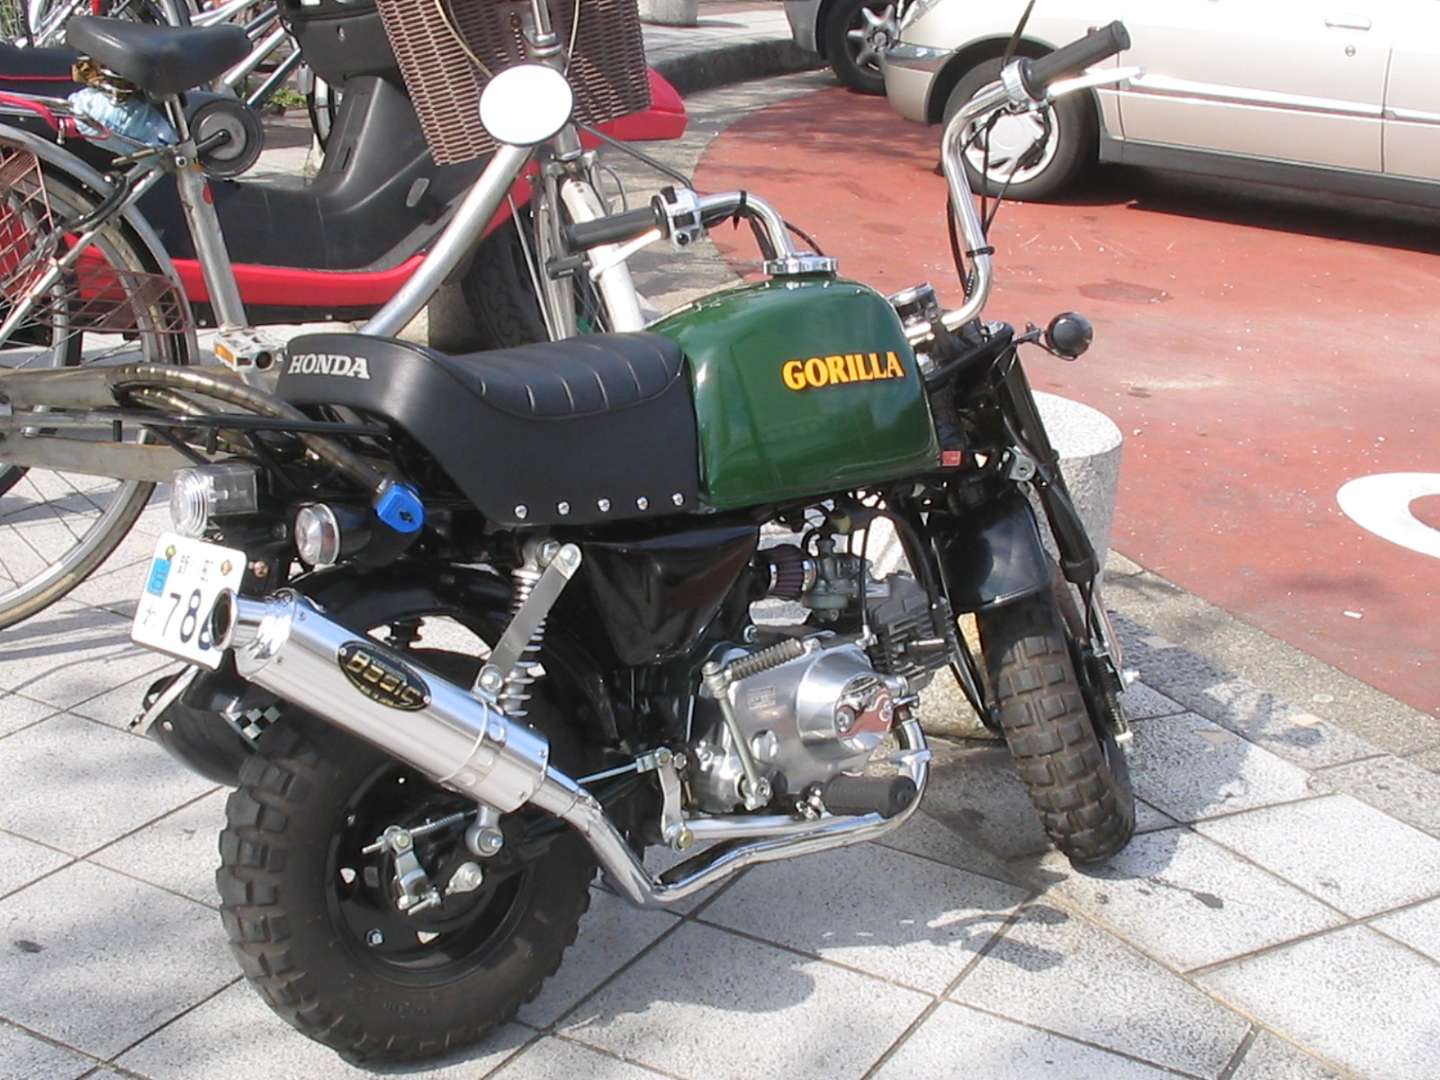 Honda Gorilla #9900057